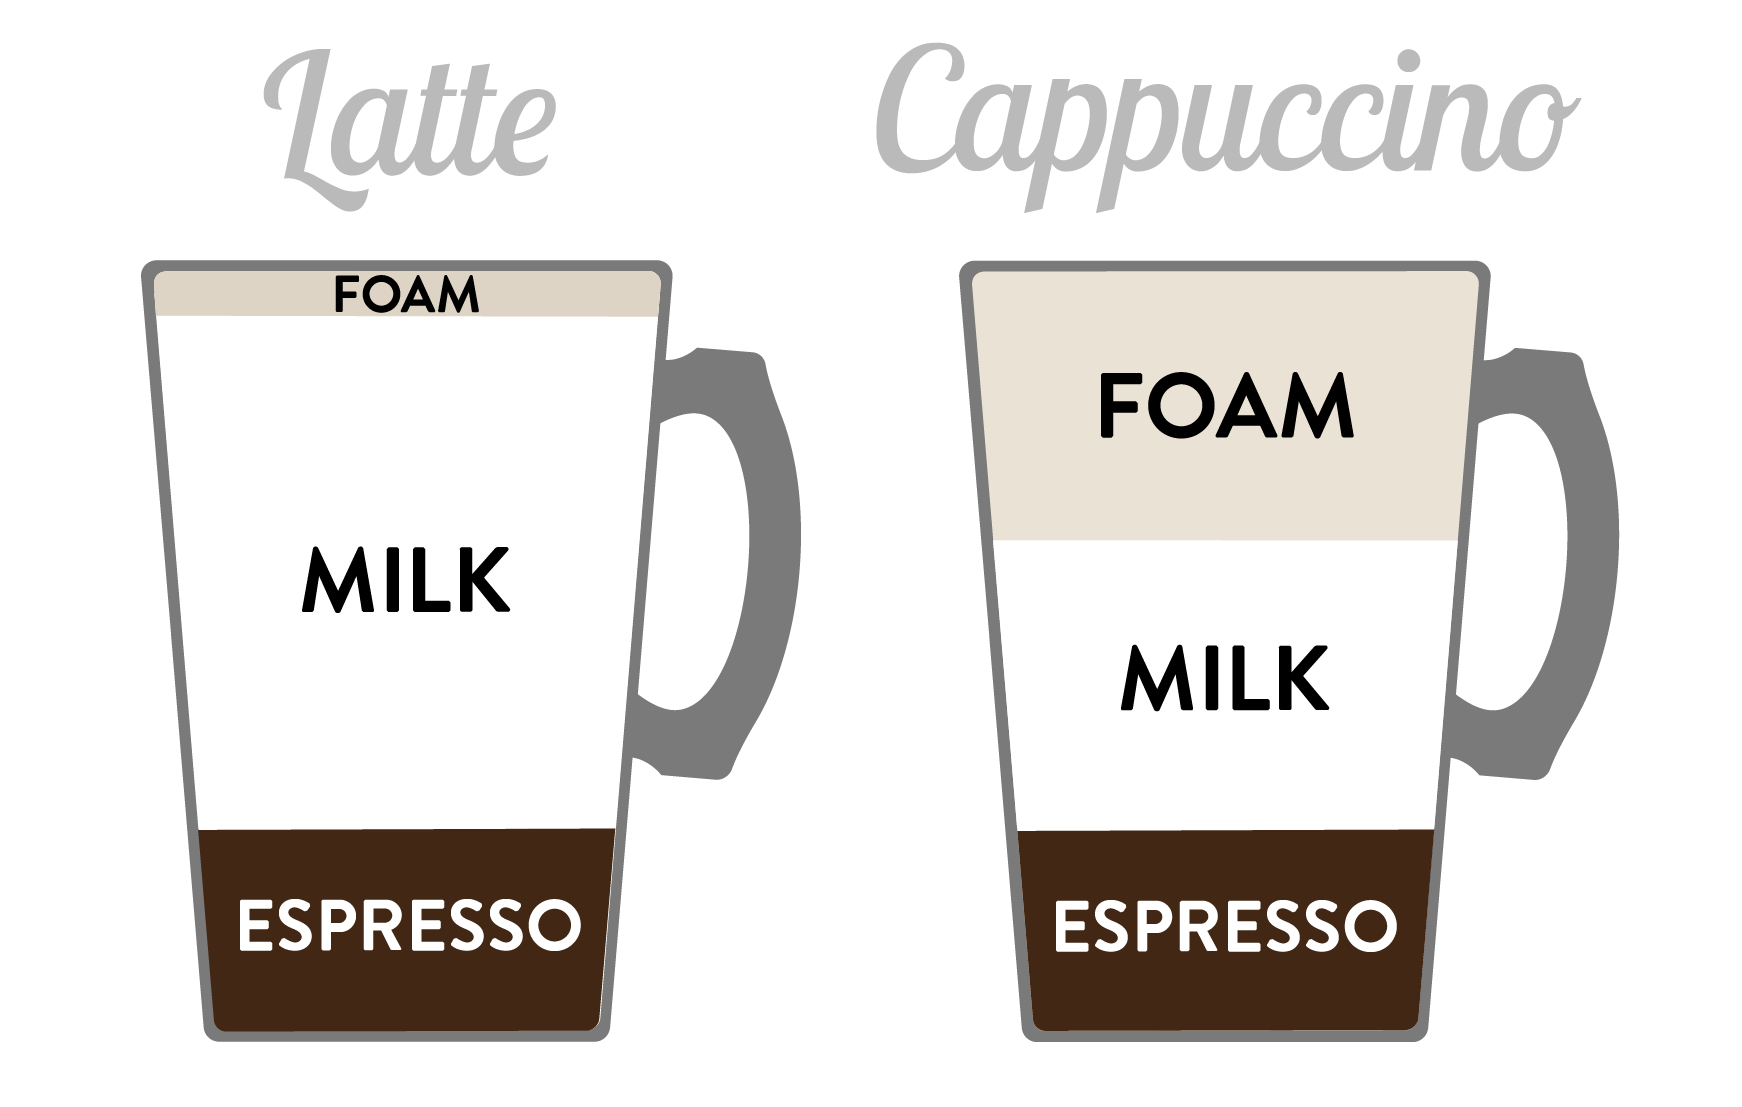 Latte and Cappuccino diagram